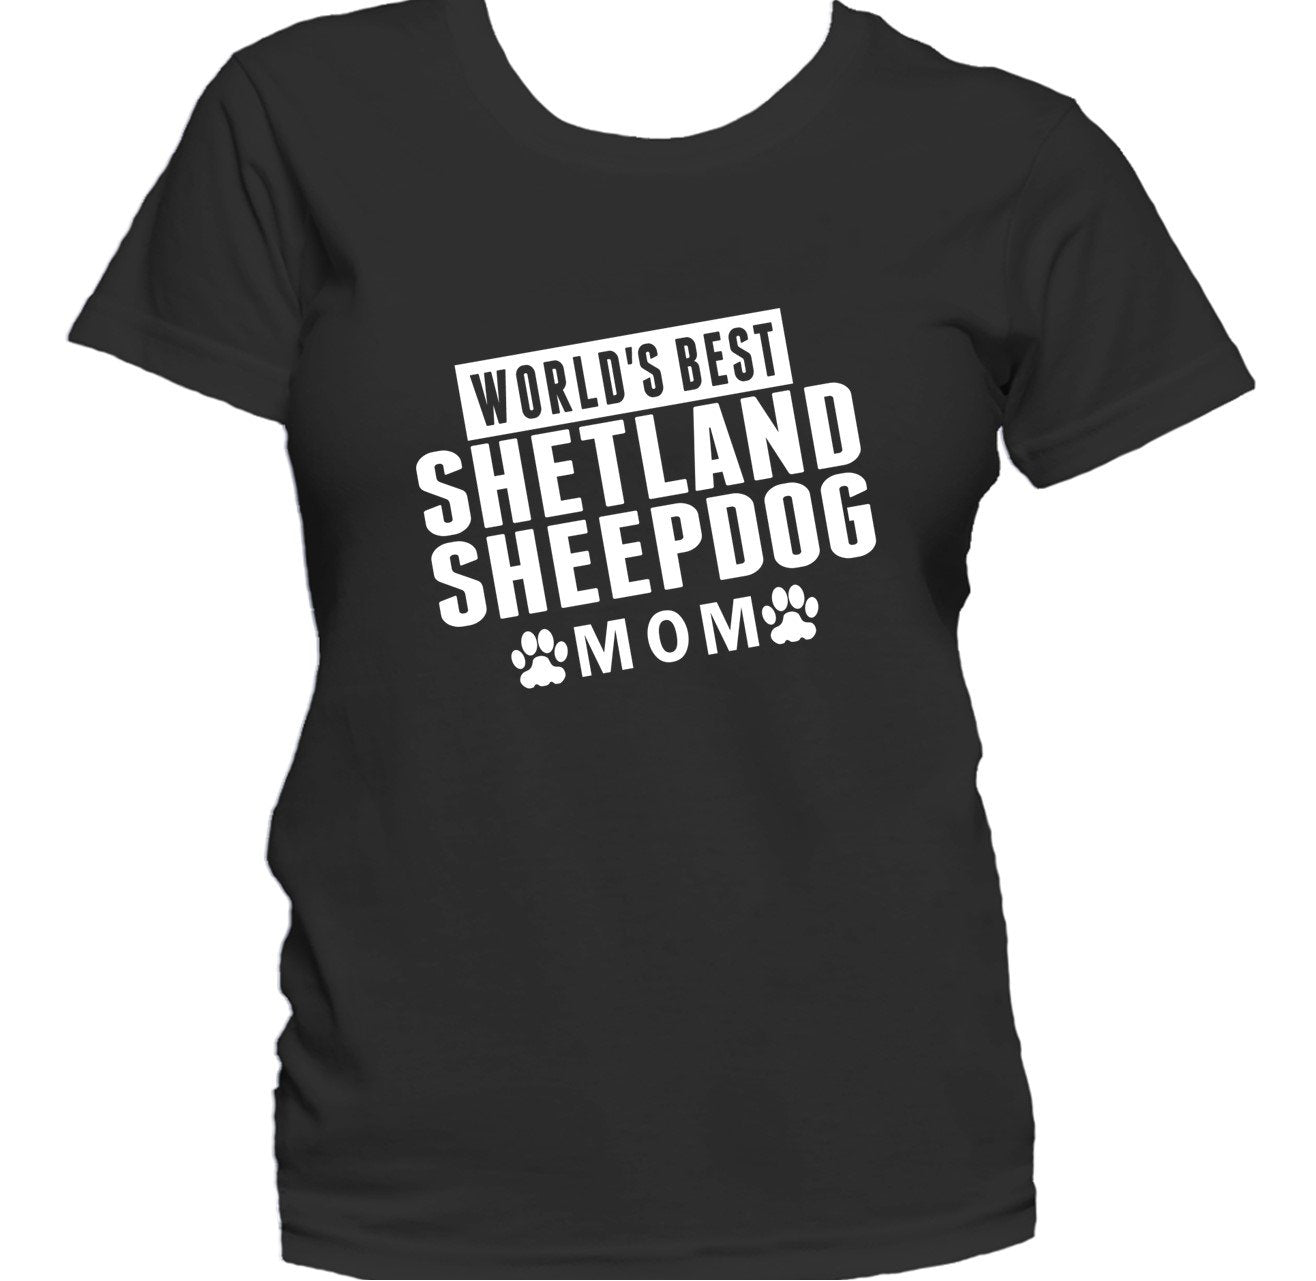 Shetland Sheepdog Mom Shirt - World's Best Shetland Sheepdog Mom Women's T-Shirt